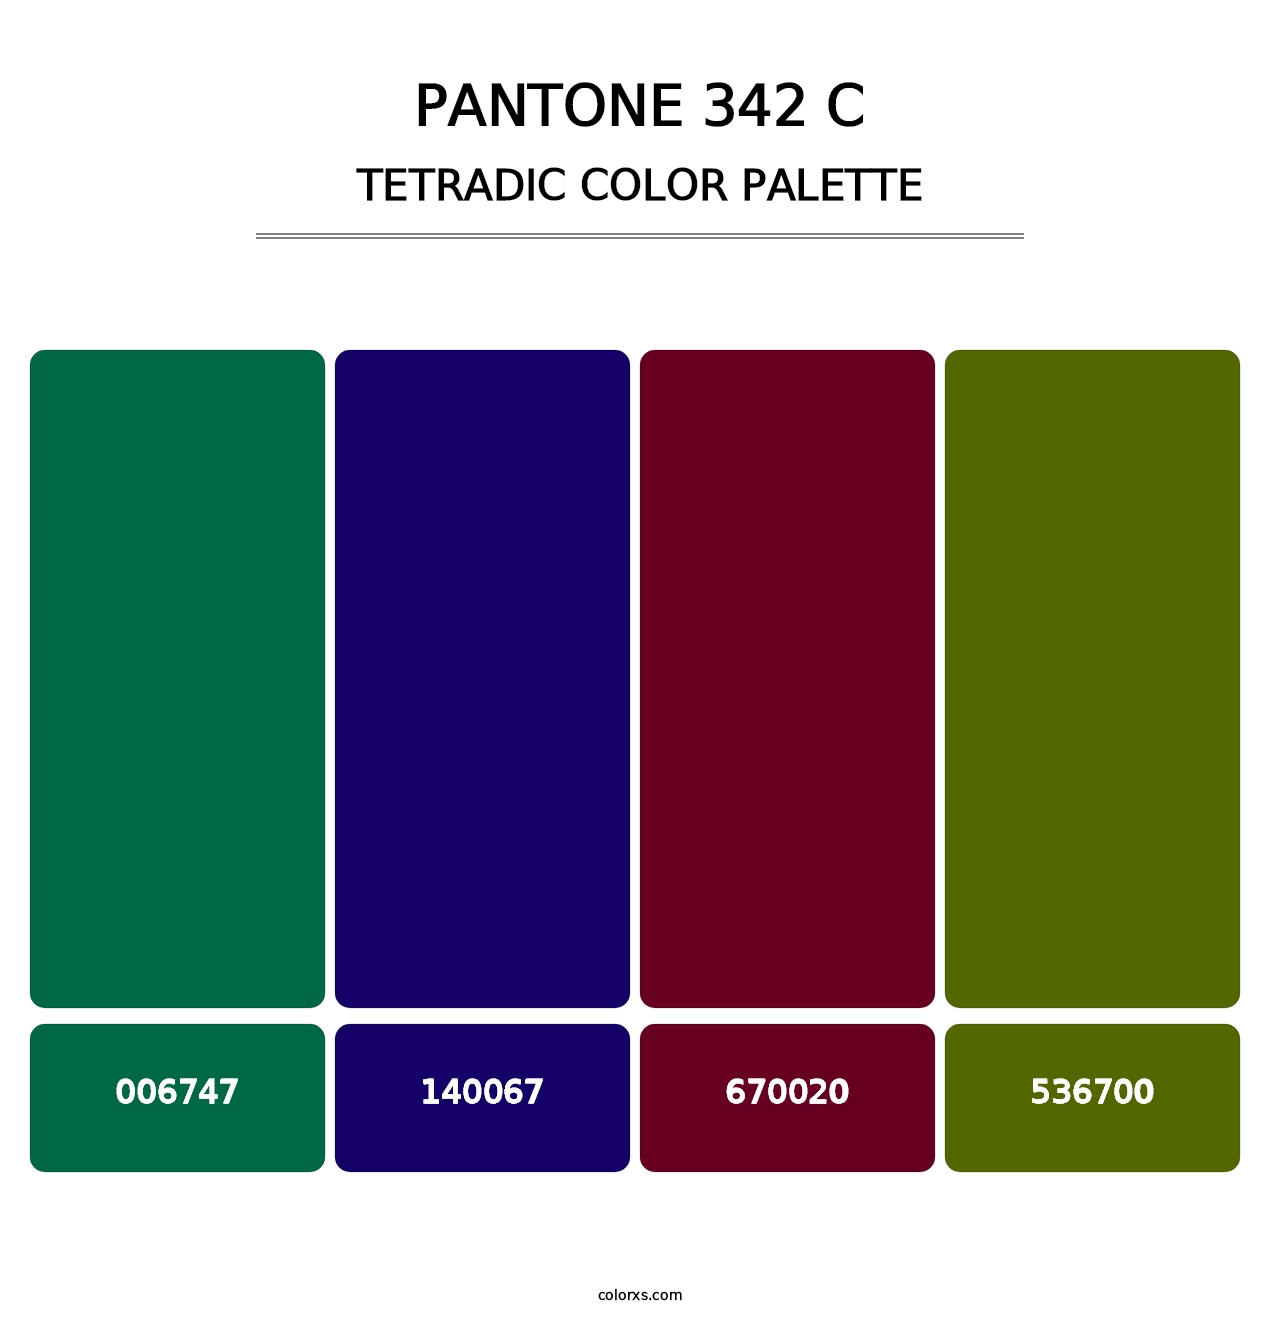 PANTONE 342 C - Tetradic Color Palette